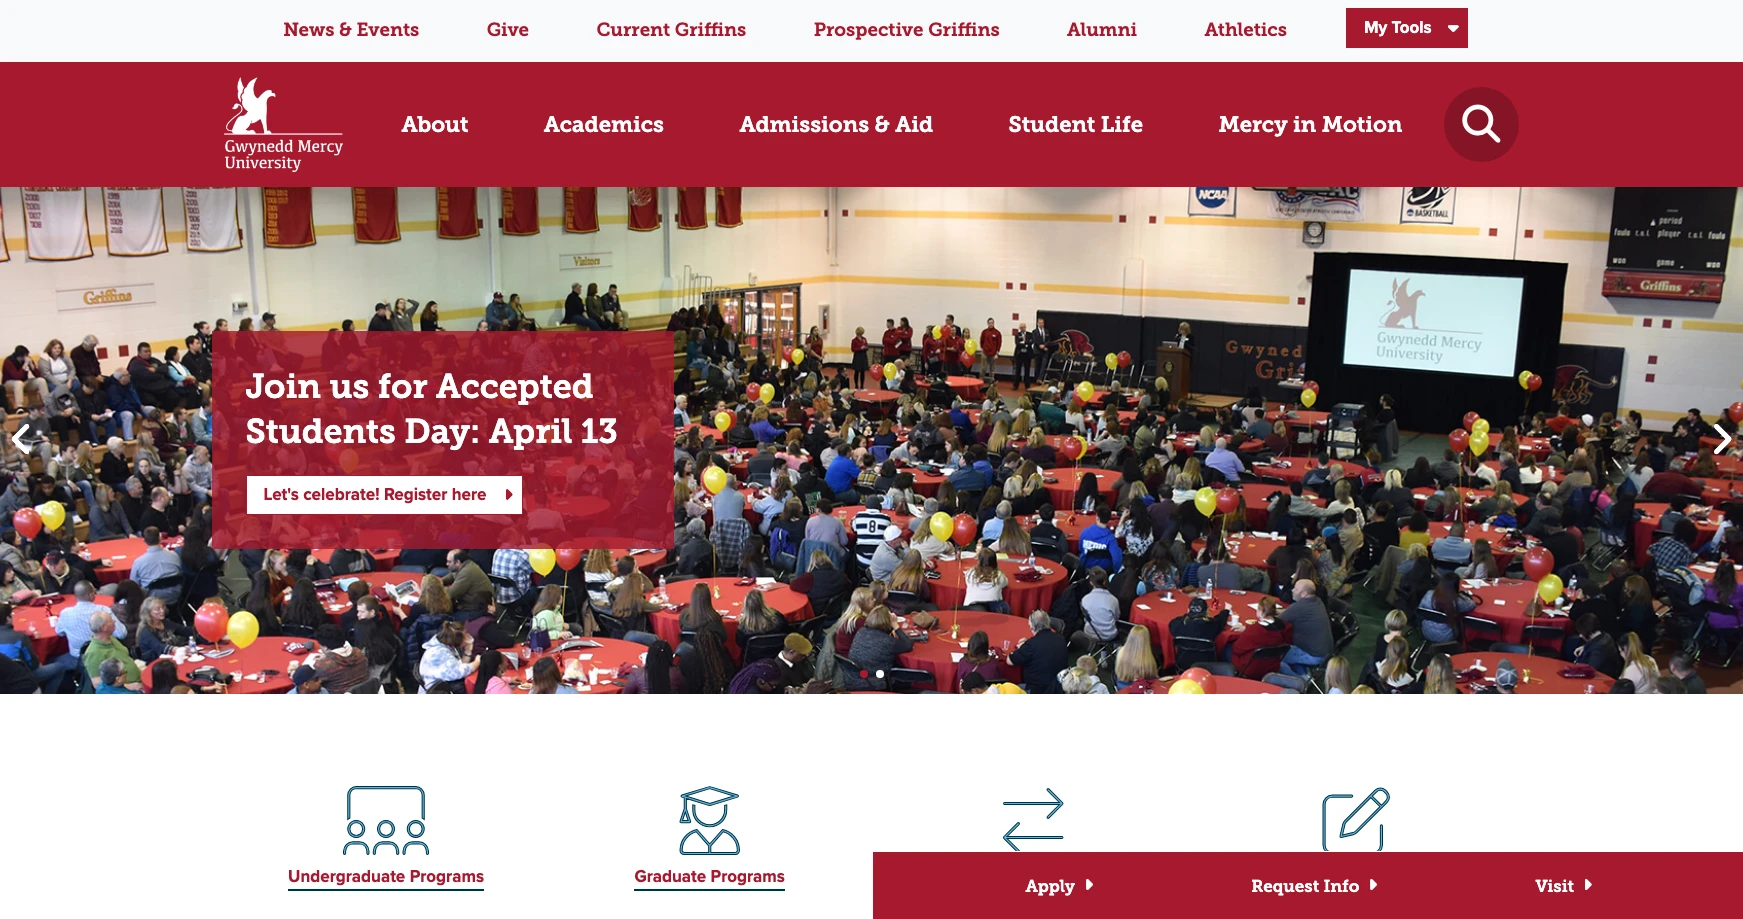 gwynedd mercy university homepage screenshot